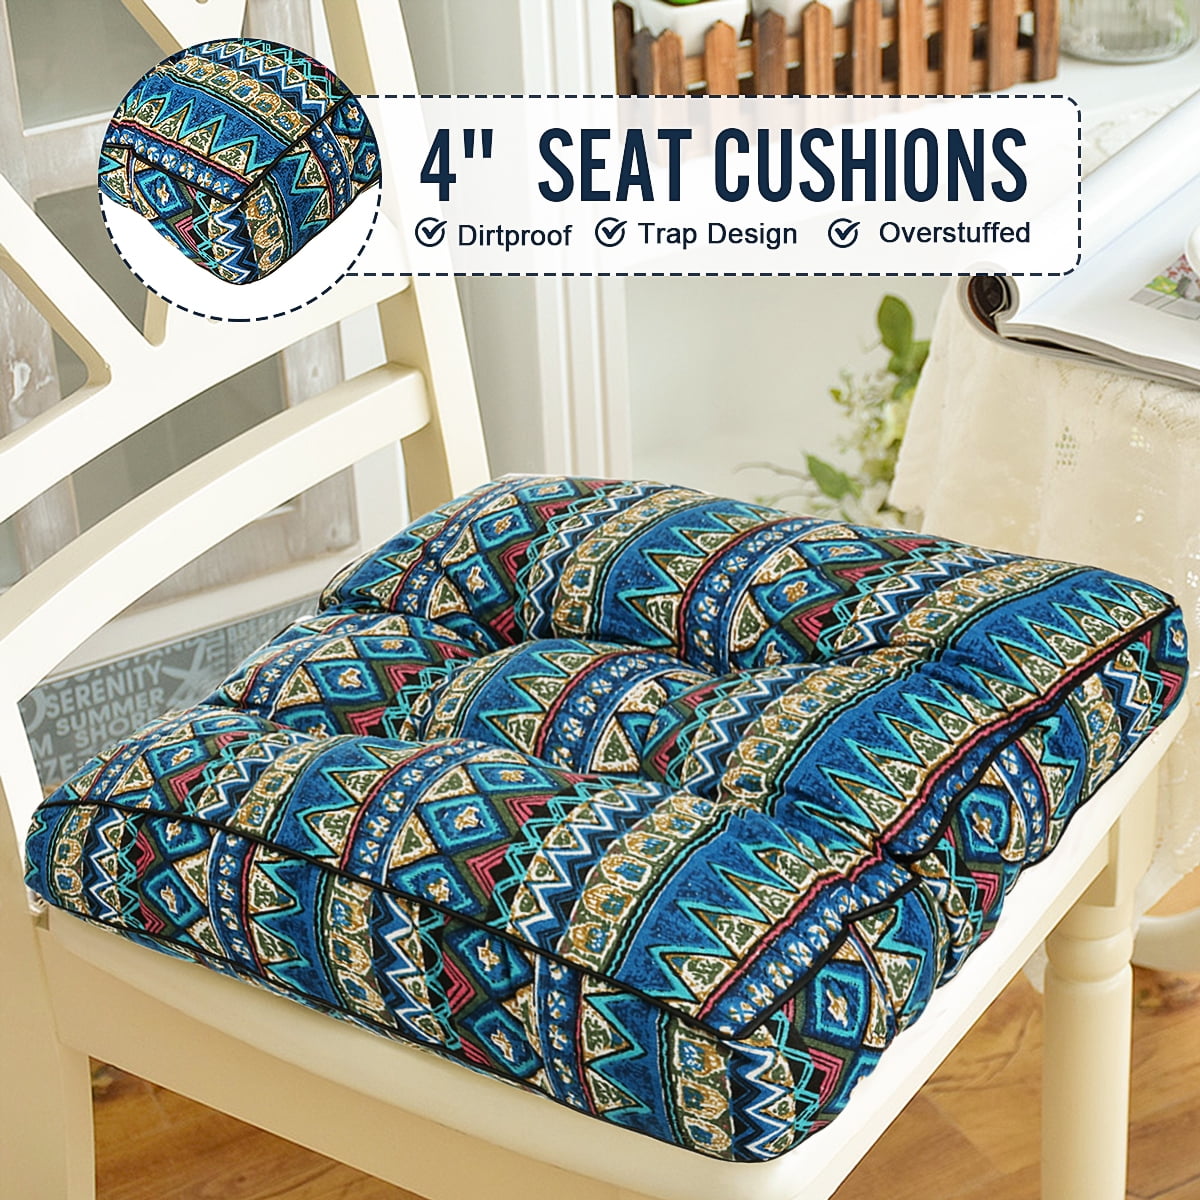 Garden Patio Furniture Recliner Cushion Soft Comfortable Chair Seat  Cushions Reclining Long Cushion